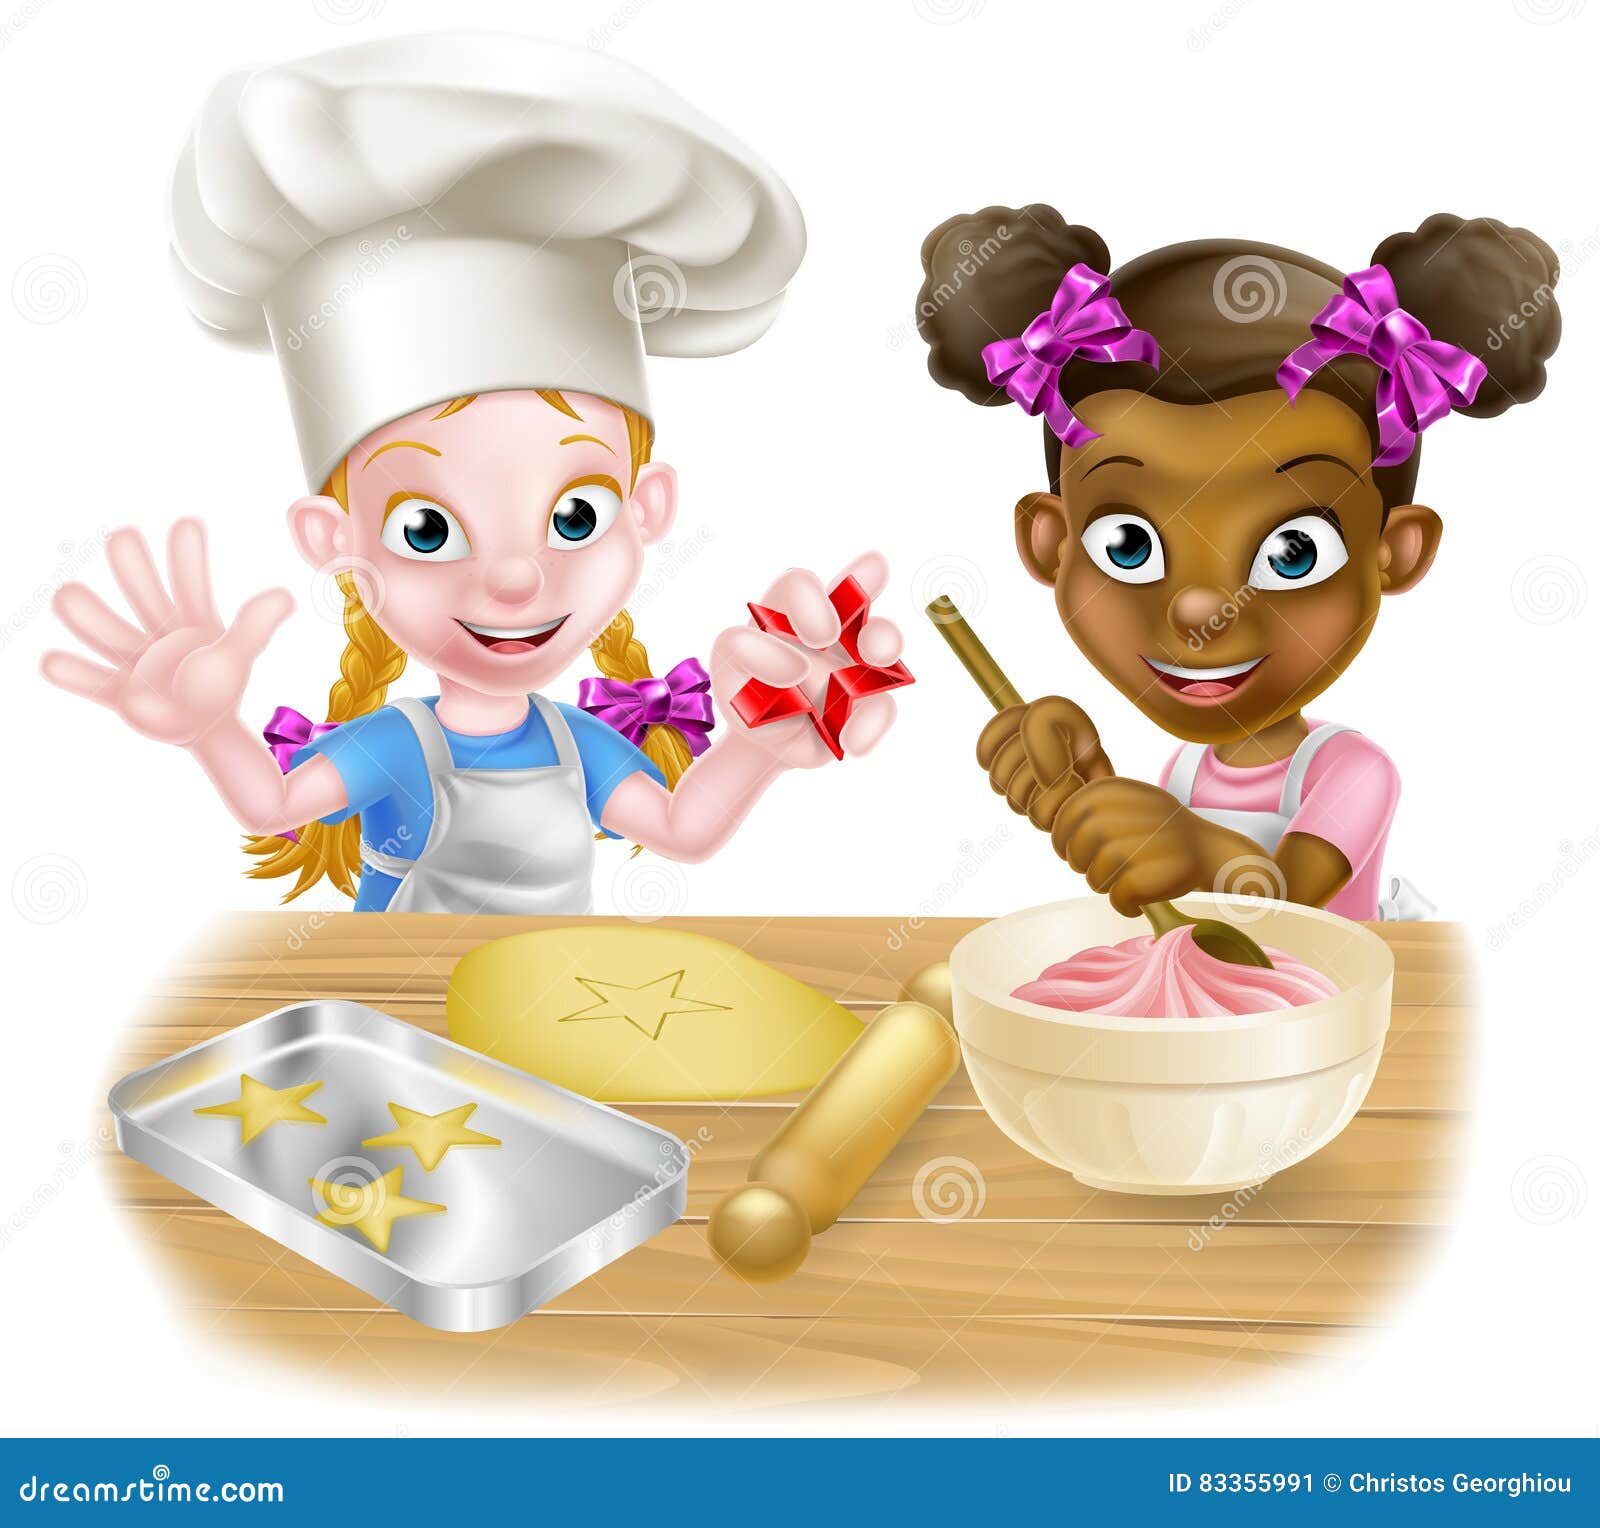 12,605 Girl Boy Baking Cake Images, Stock Photos & Vectors | Shutterstock